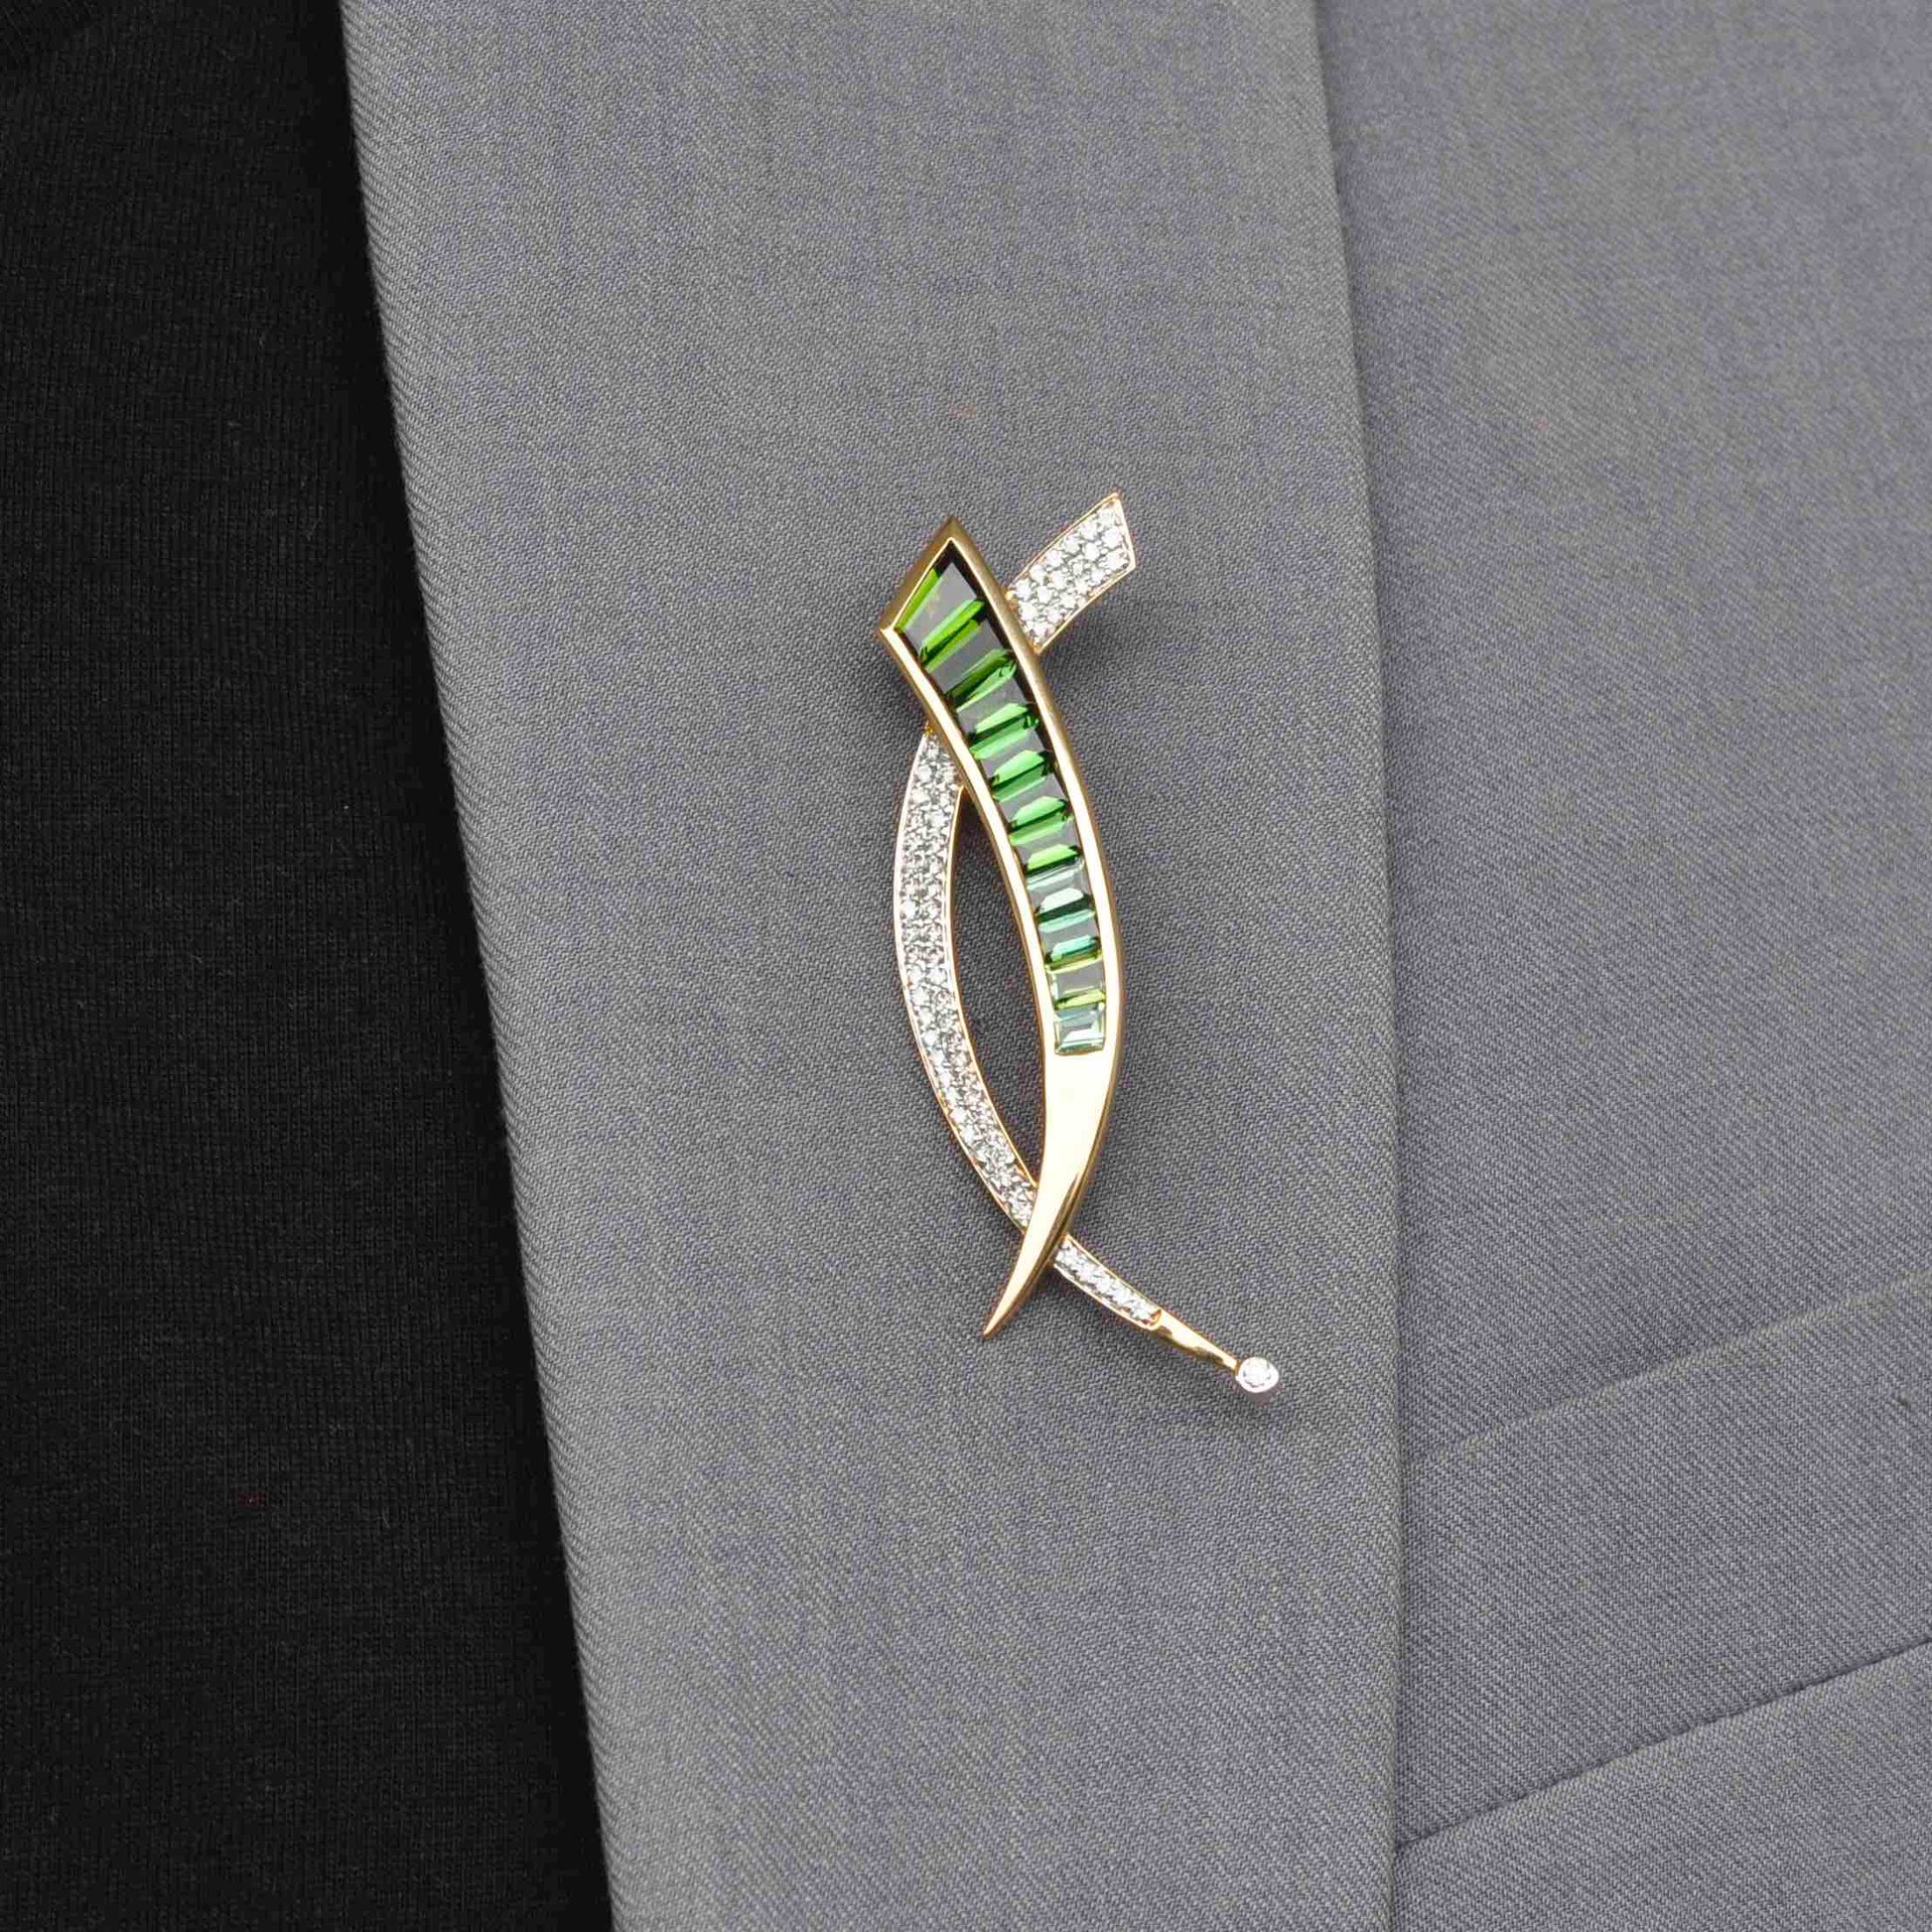 18k Baguette Diamond Brooch Pendant with Green Gemstone